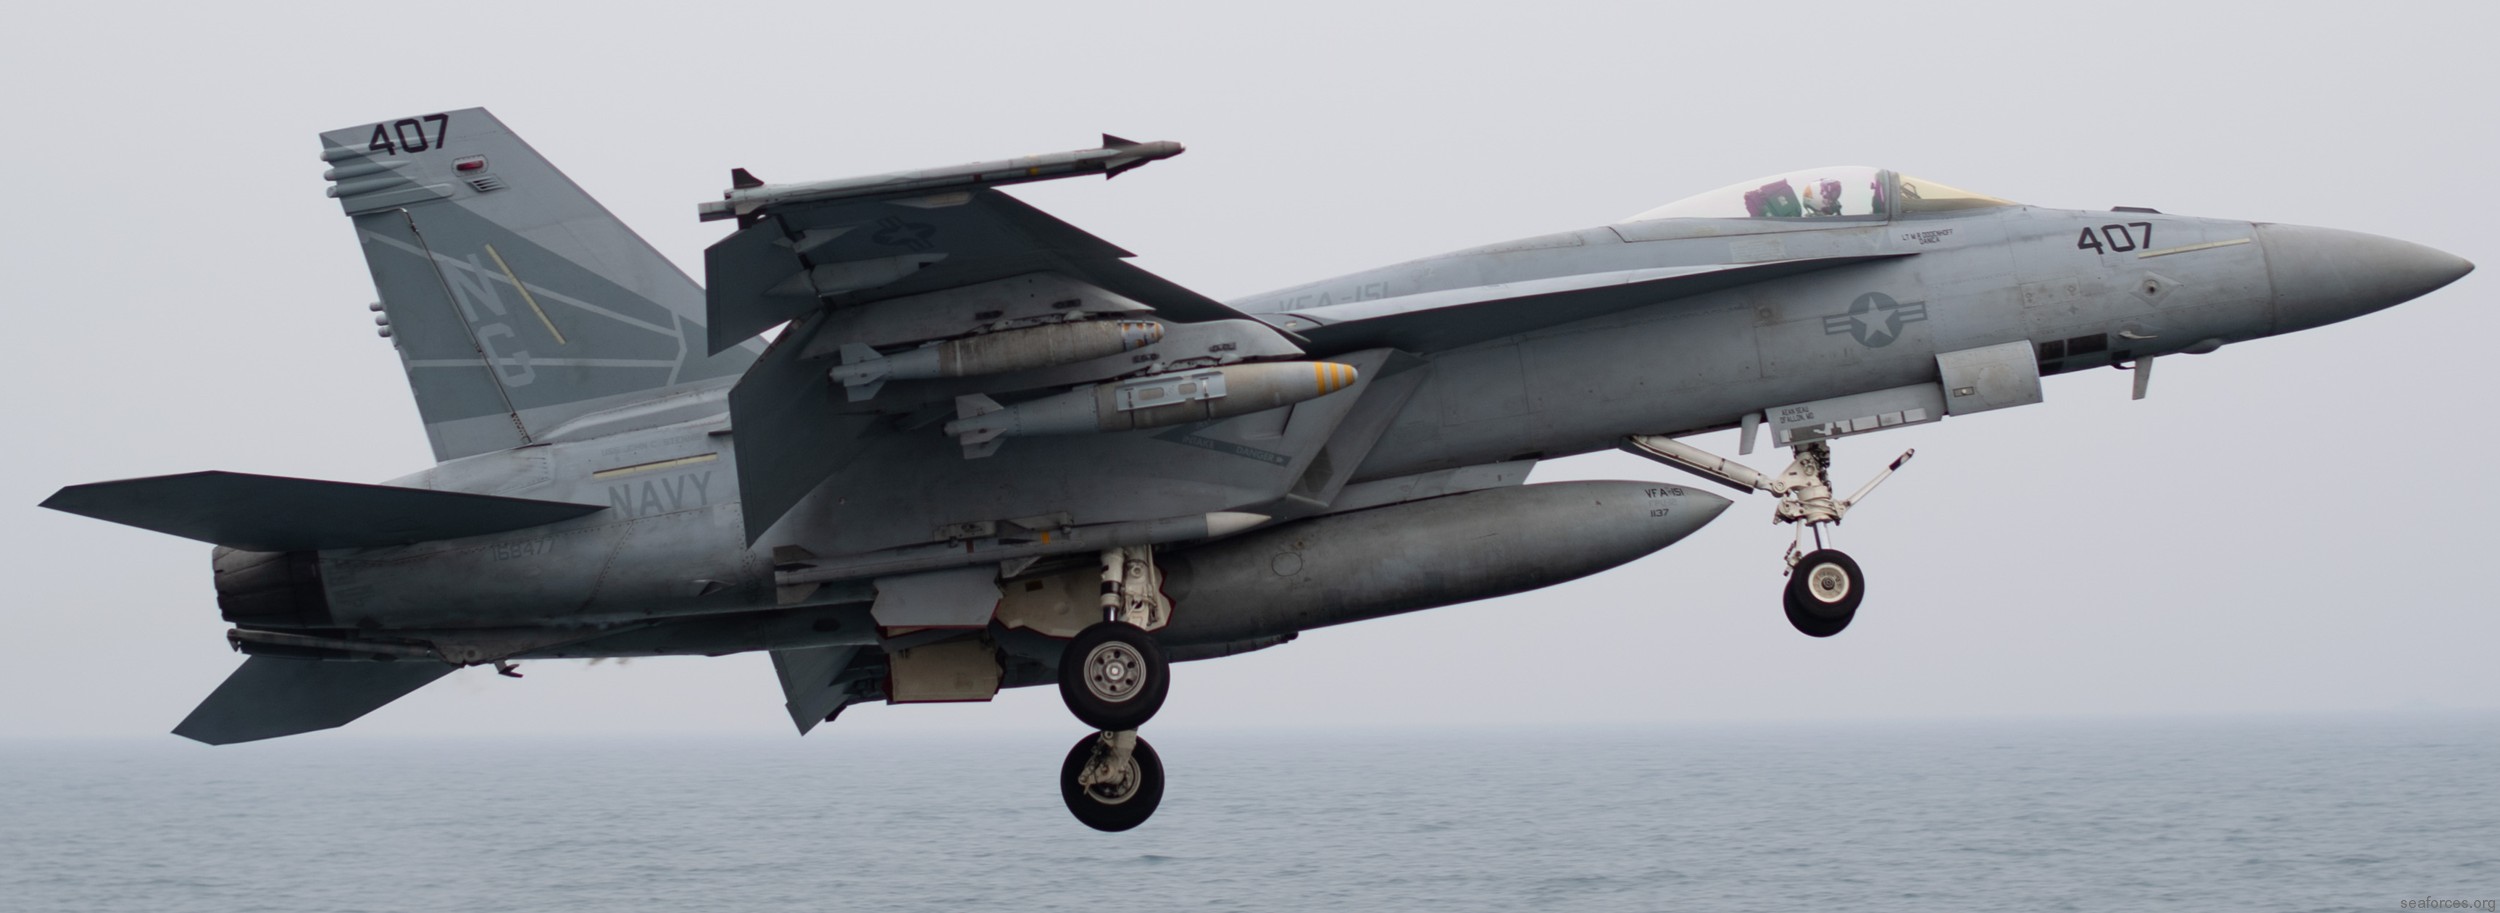 vfa-151 vigilantes strike fighter squadron navy f/a-18e super hornet carrier air wing cvw-9 uss john c. stennis cvn-74 02